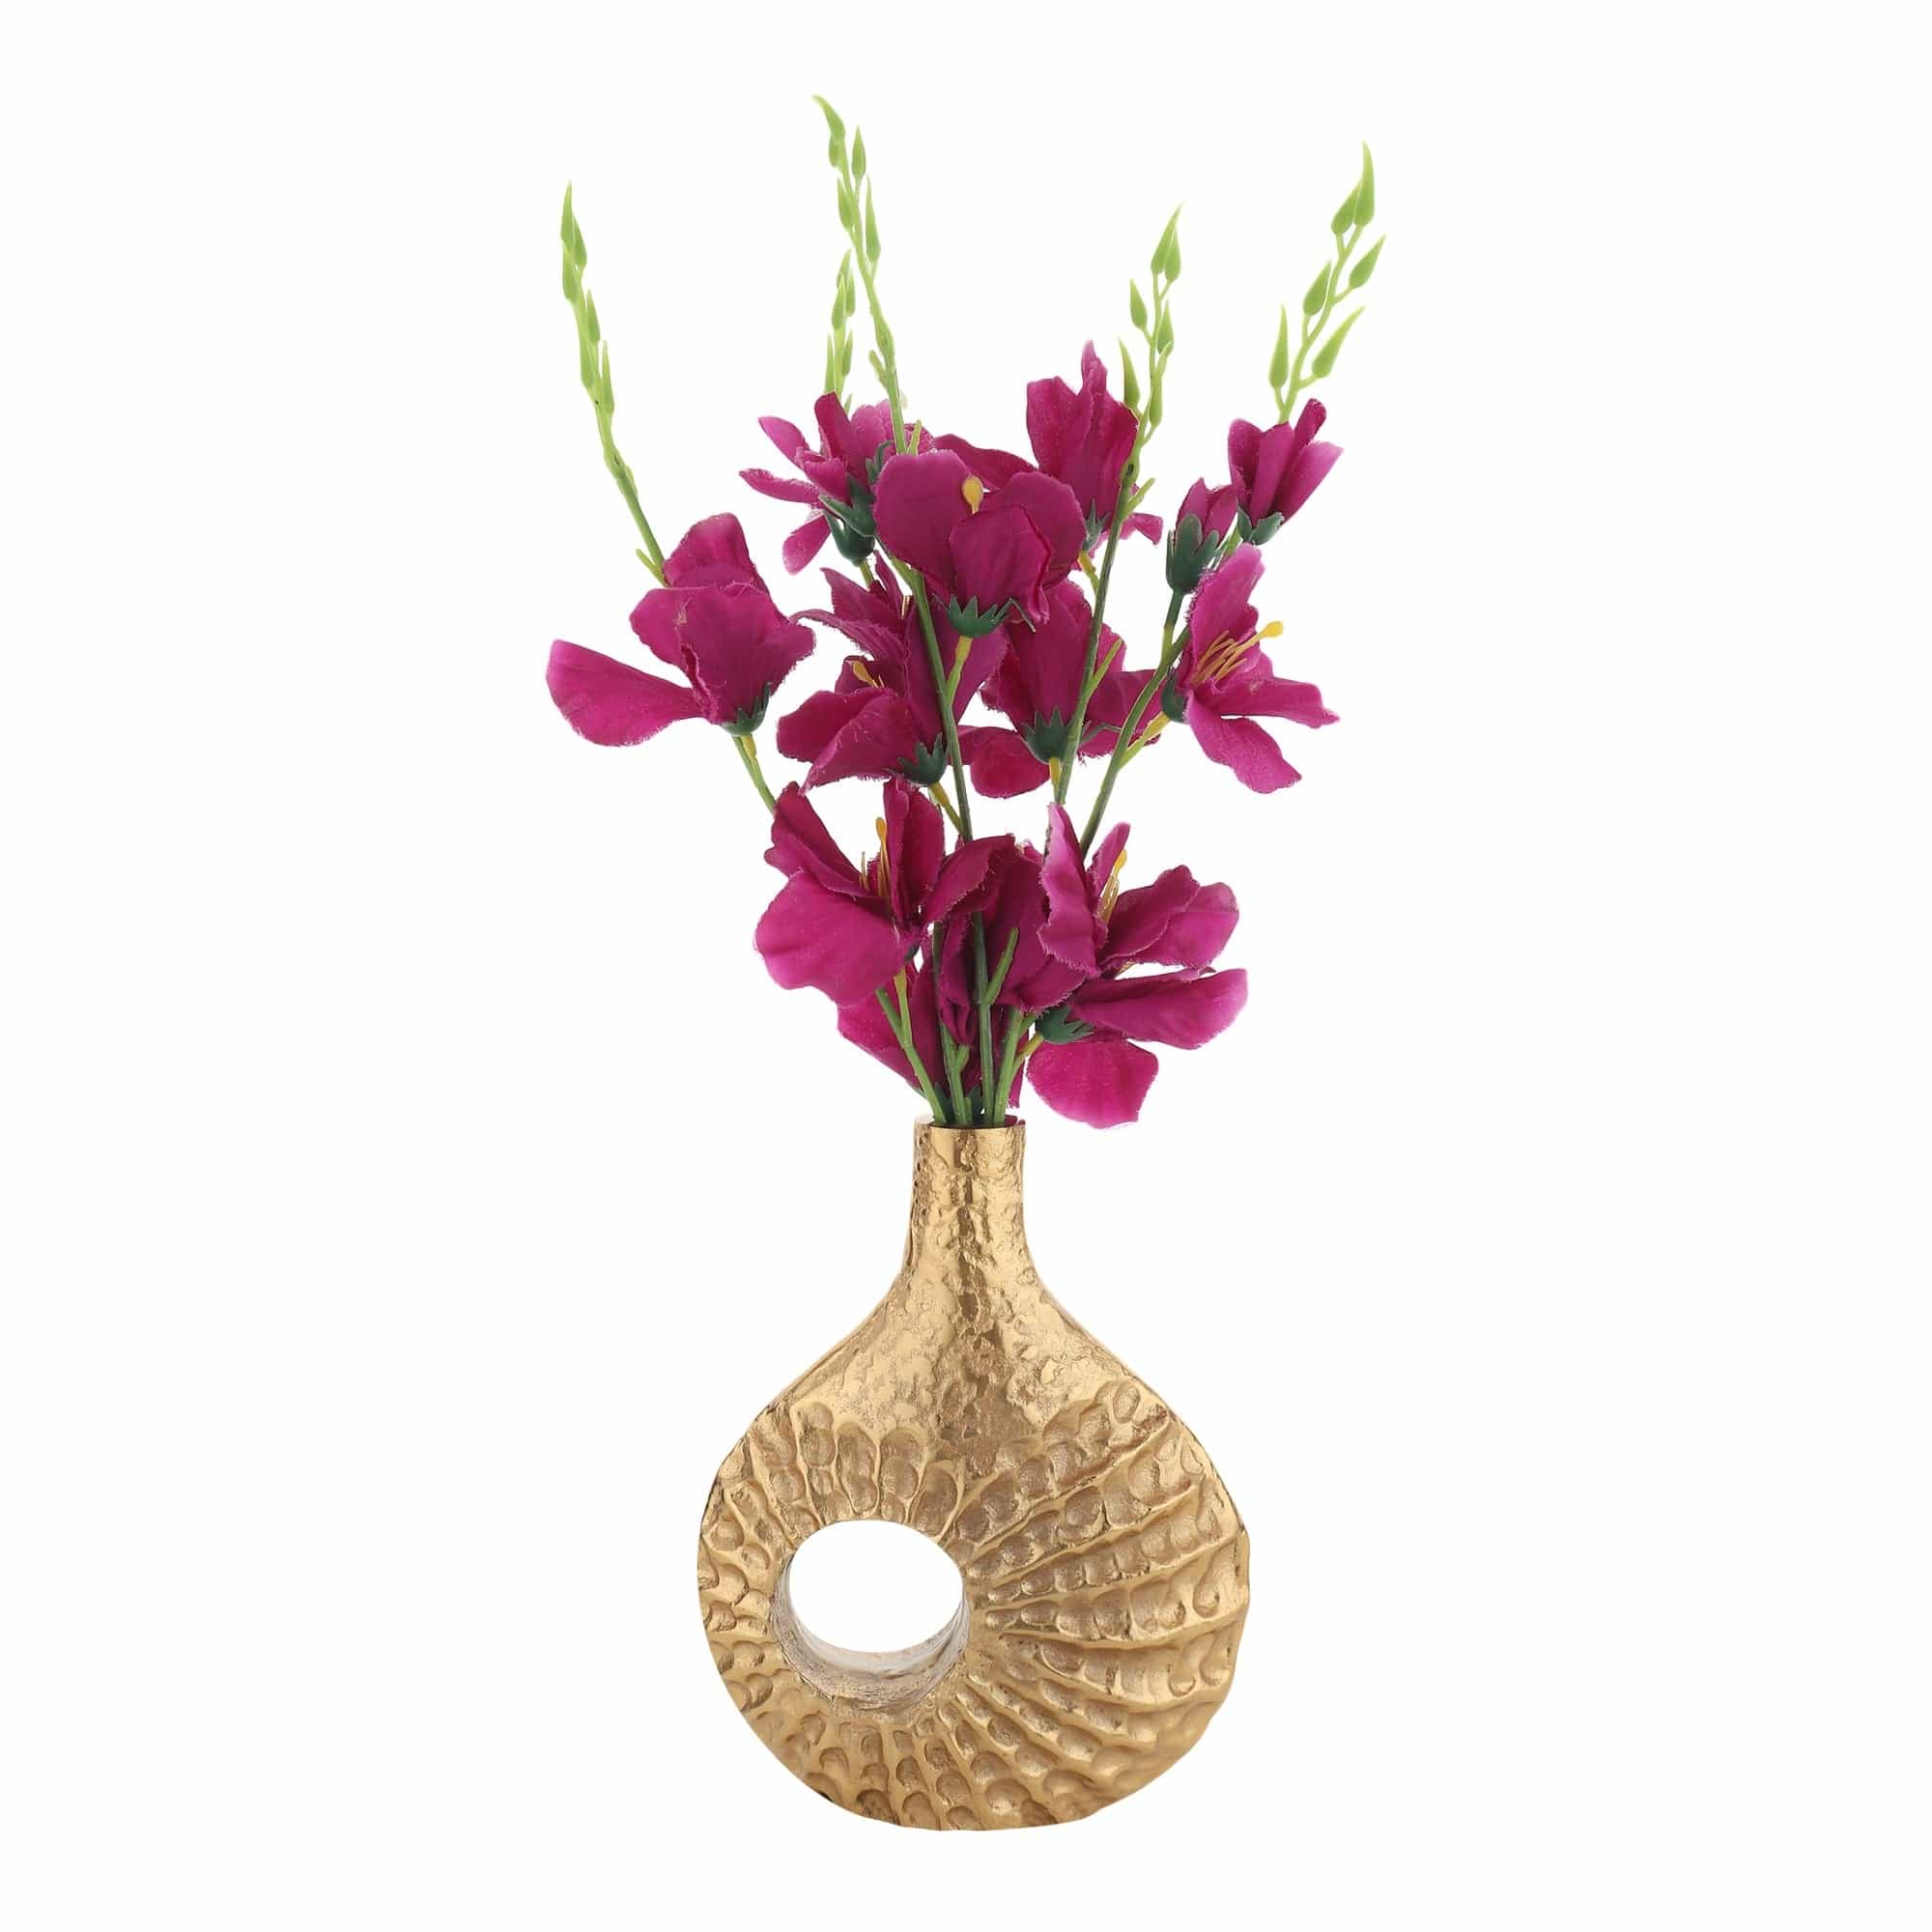 Seashell Serenity Vase -  small Gold